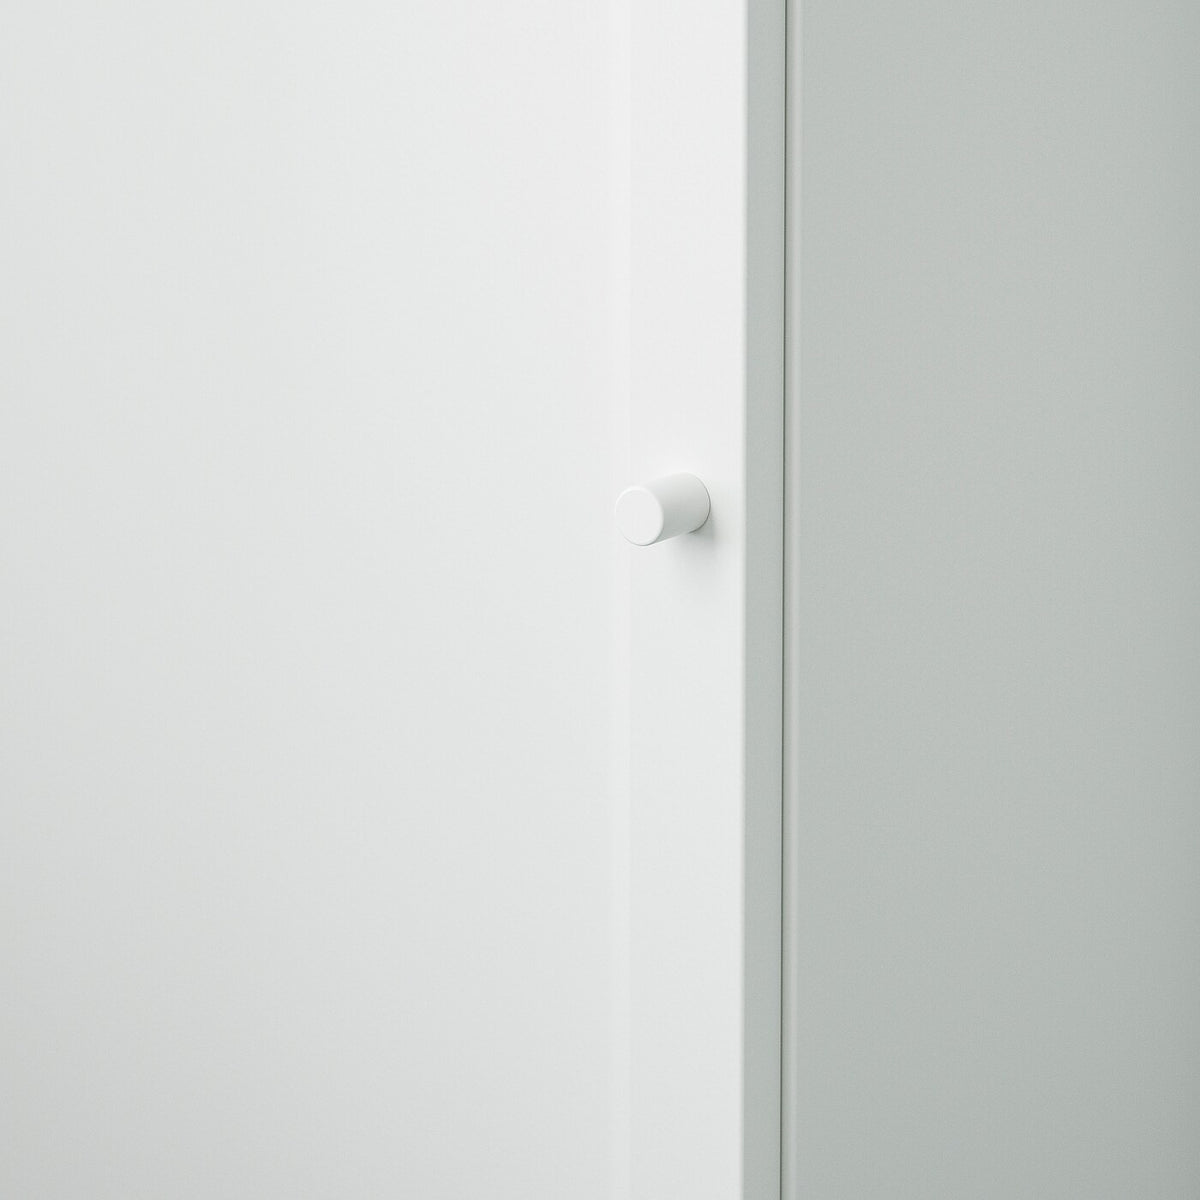 IKEA BILLY Bookcase with door, white, 40x30x106 cm